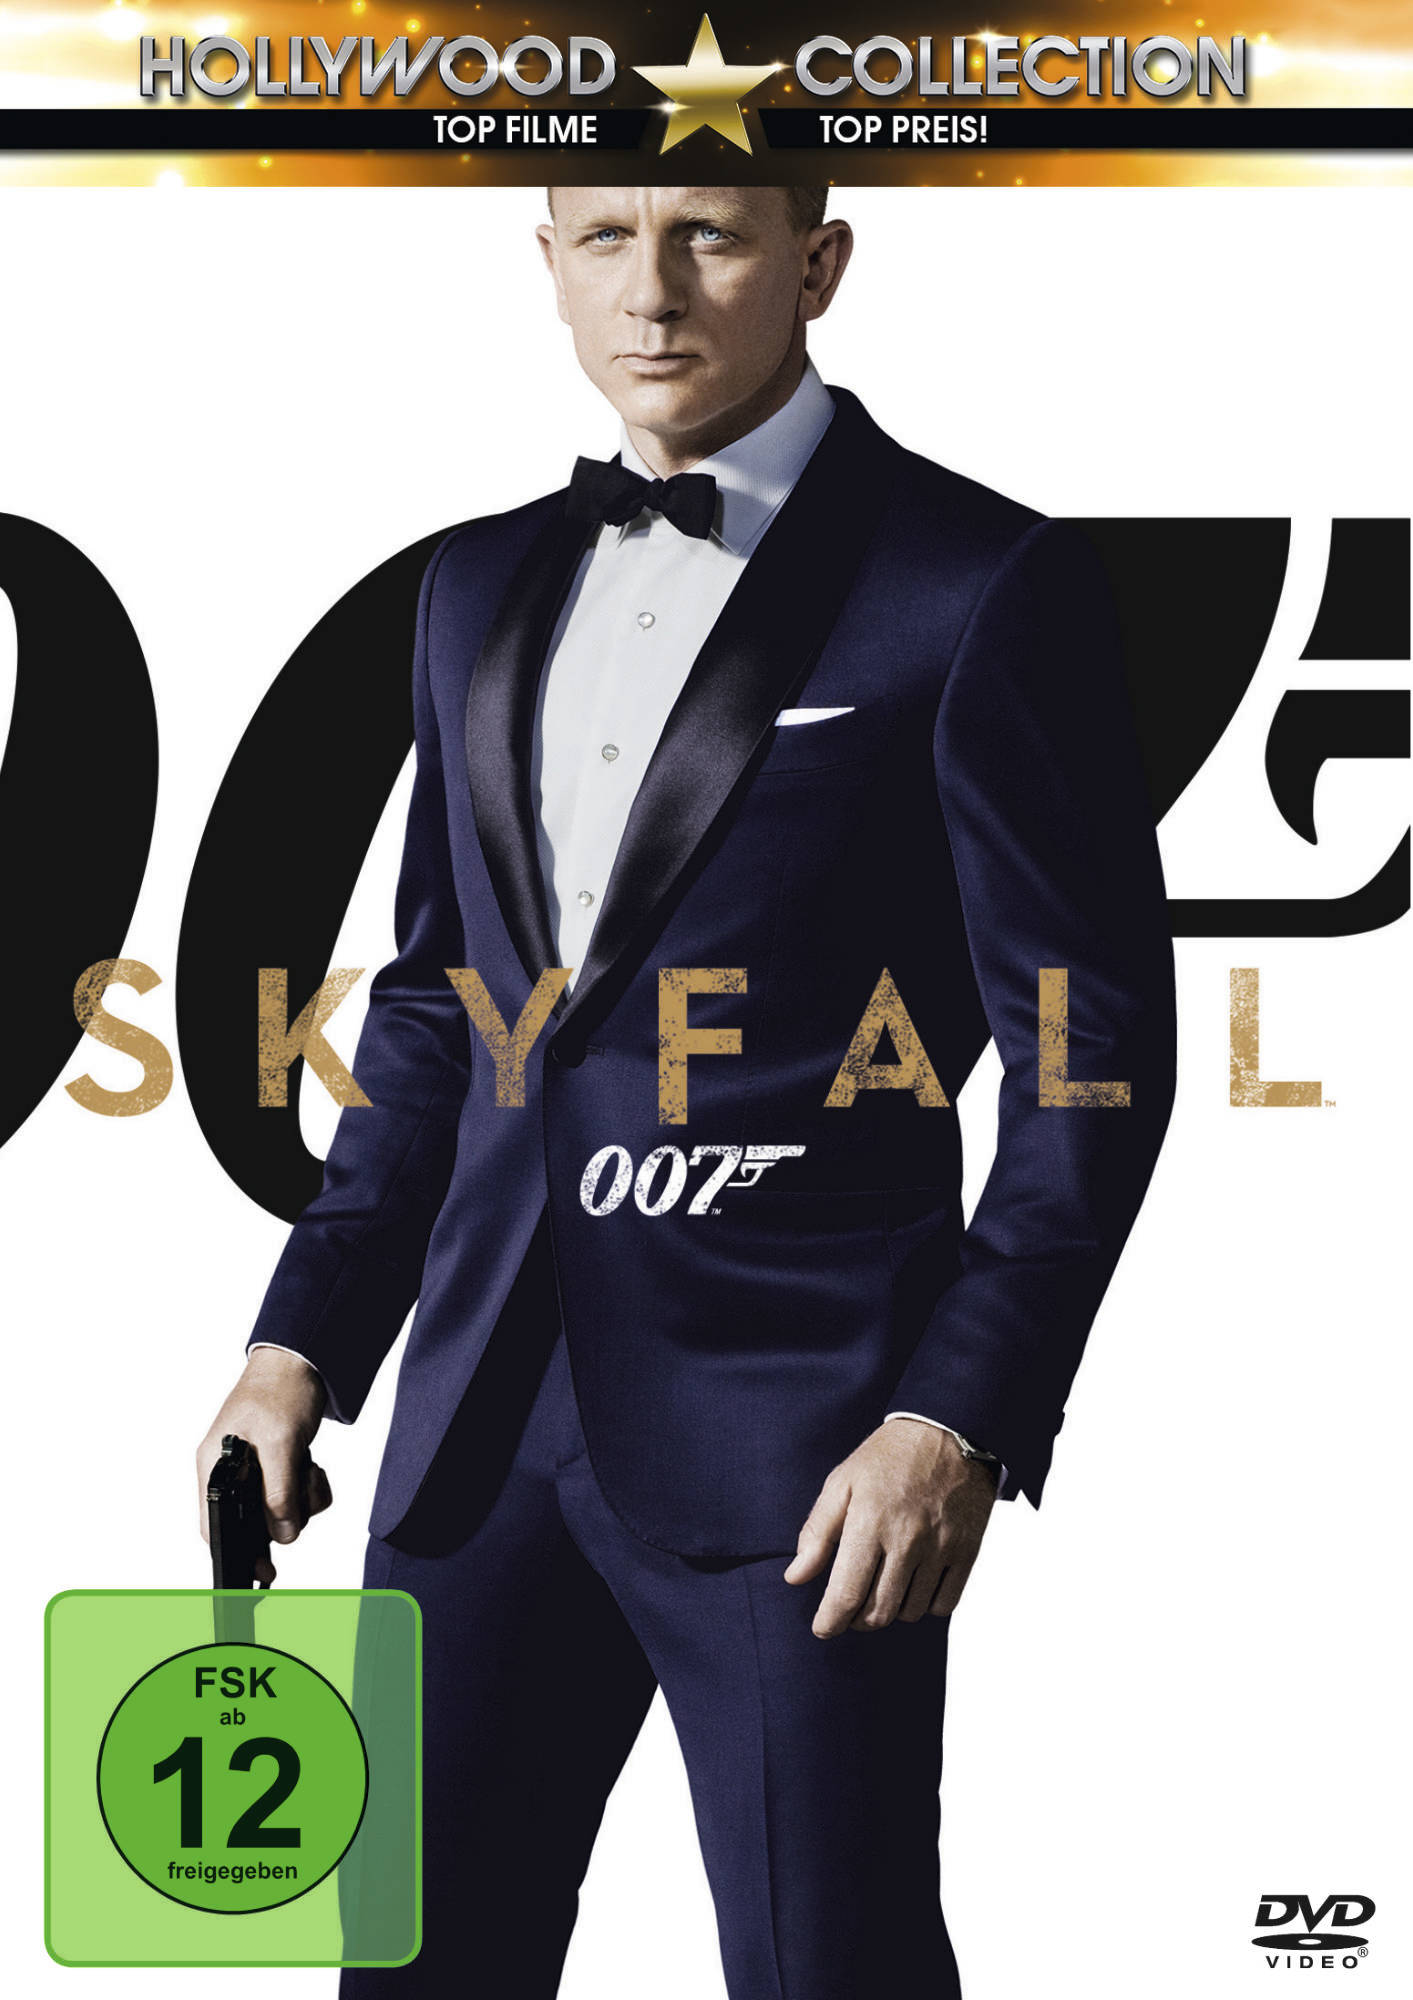 James Bond Skyfall - DVD 007